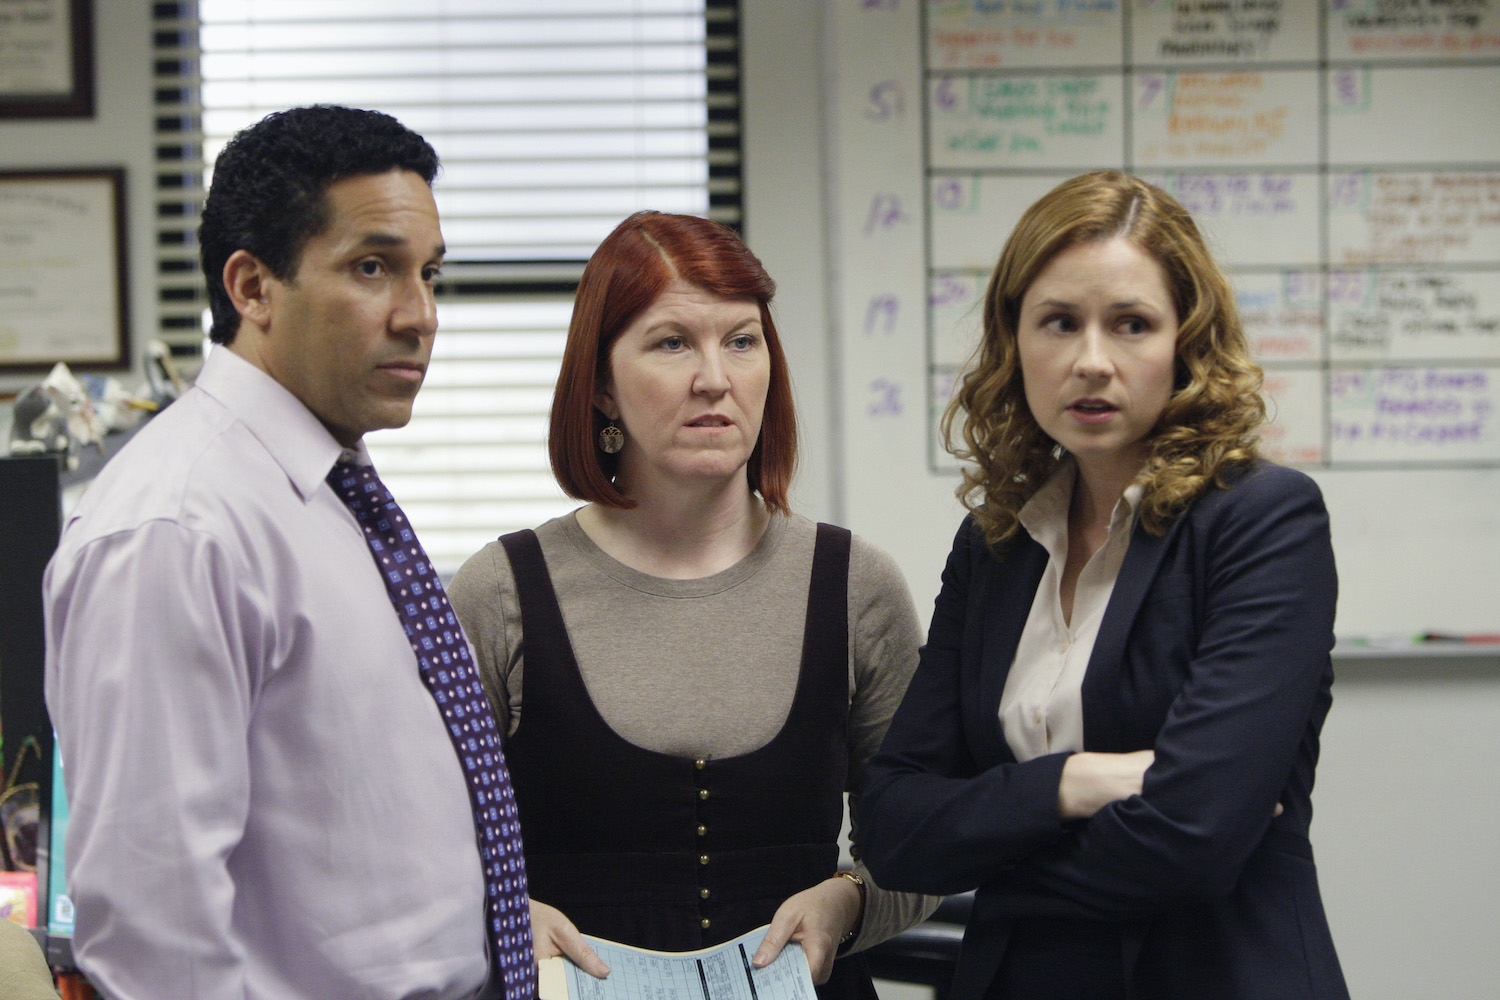 The Office cast: Oscar Nunez as Oscar Martinez, Kate Flannery as Meredith Palmer, and Jenna Fischer as Pam Beesly